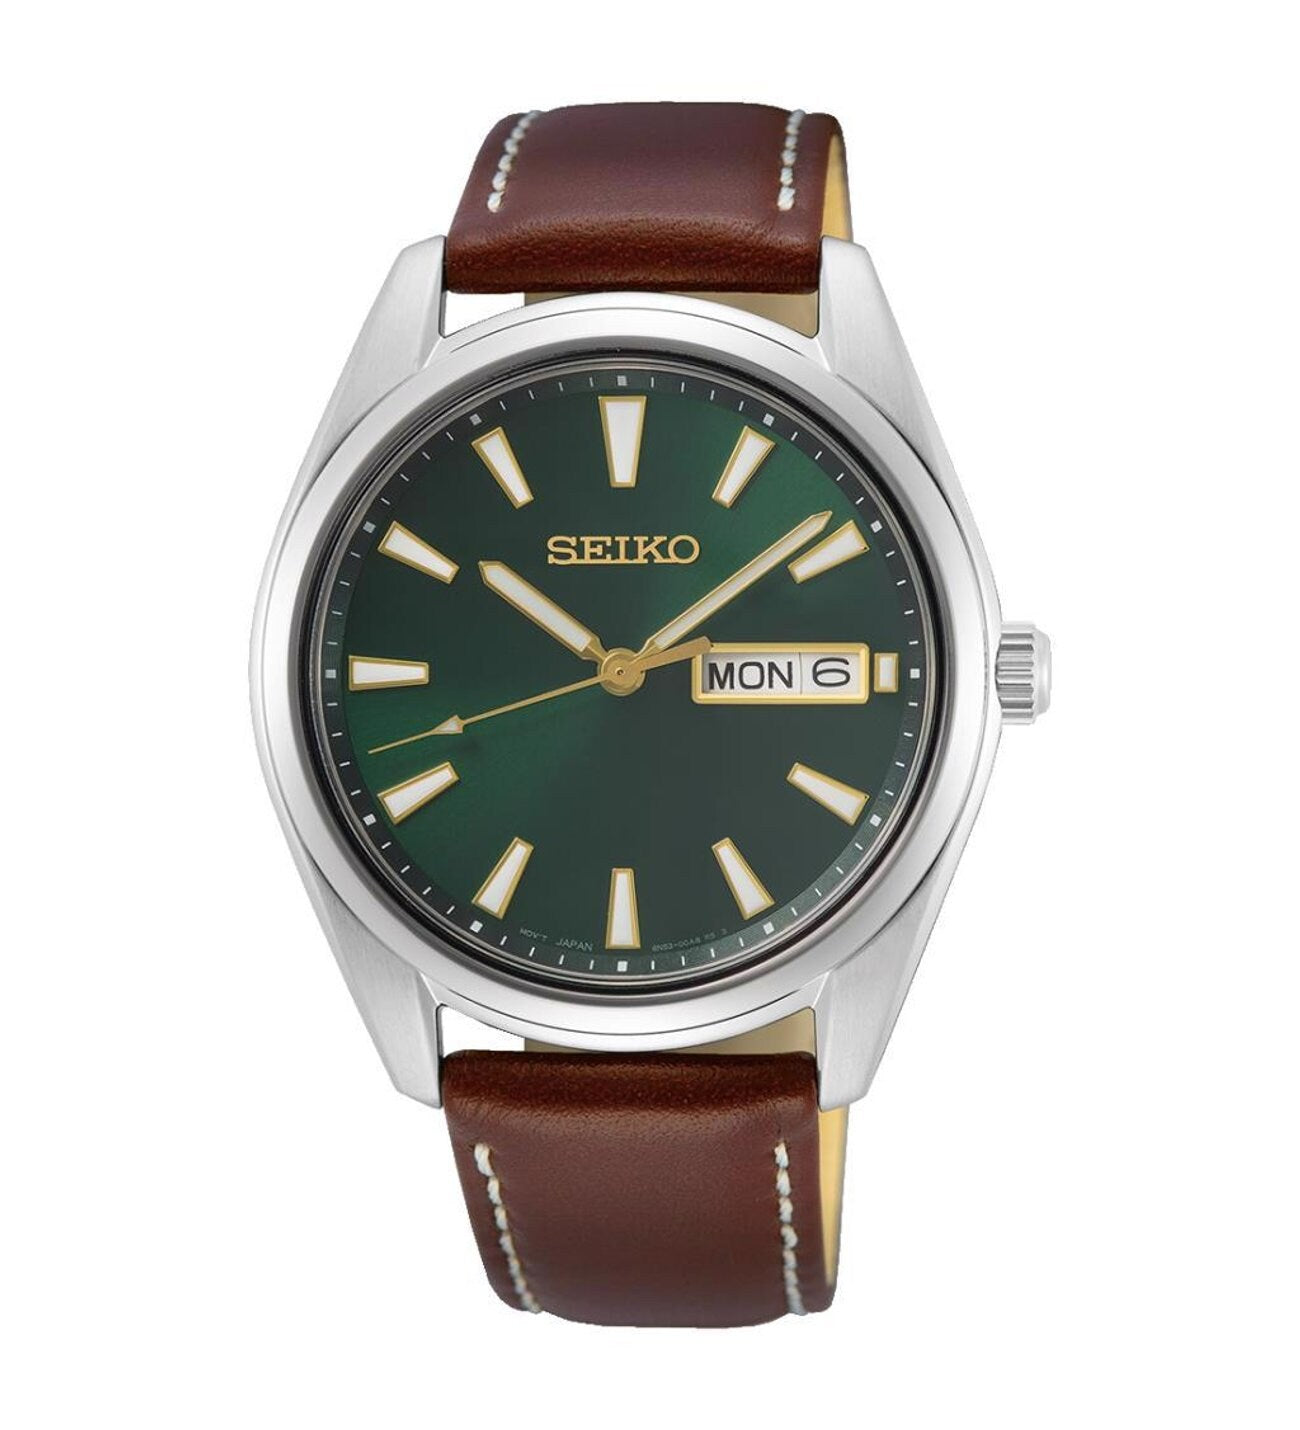 Seiko men's quartz watch in green and brown